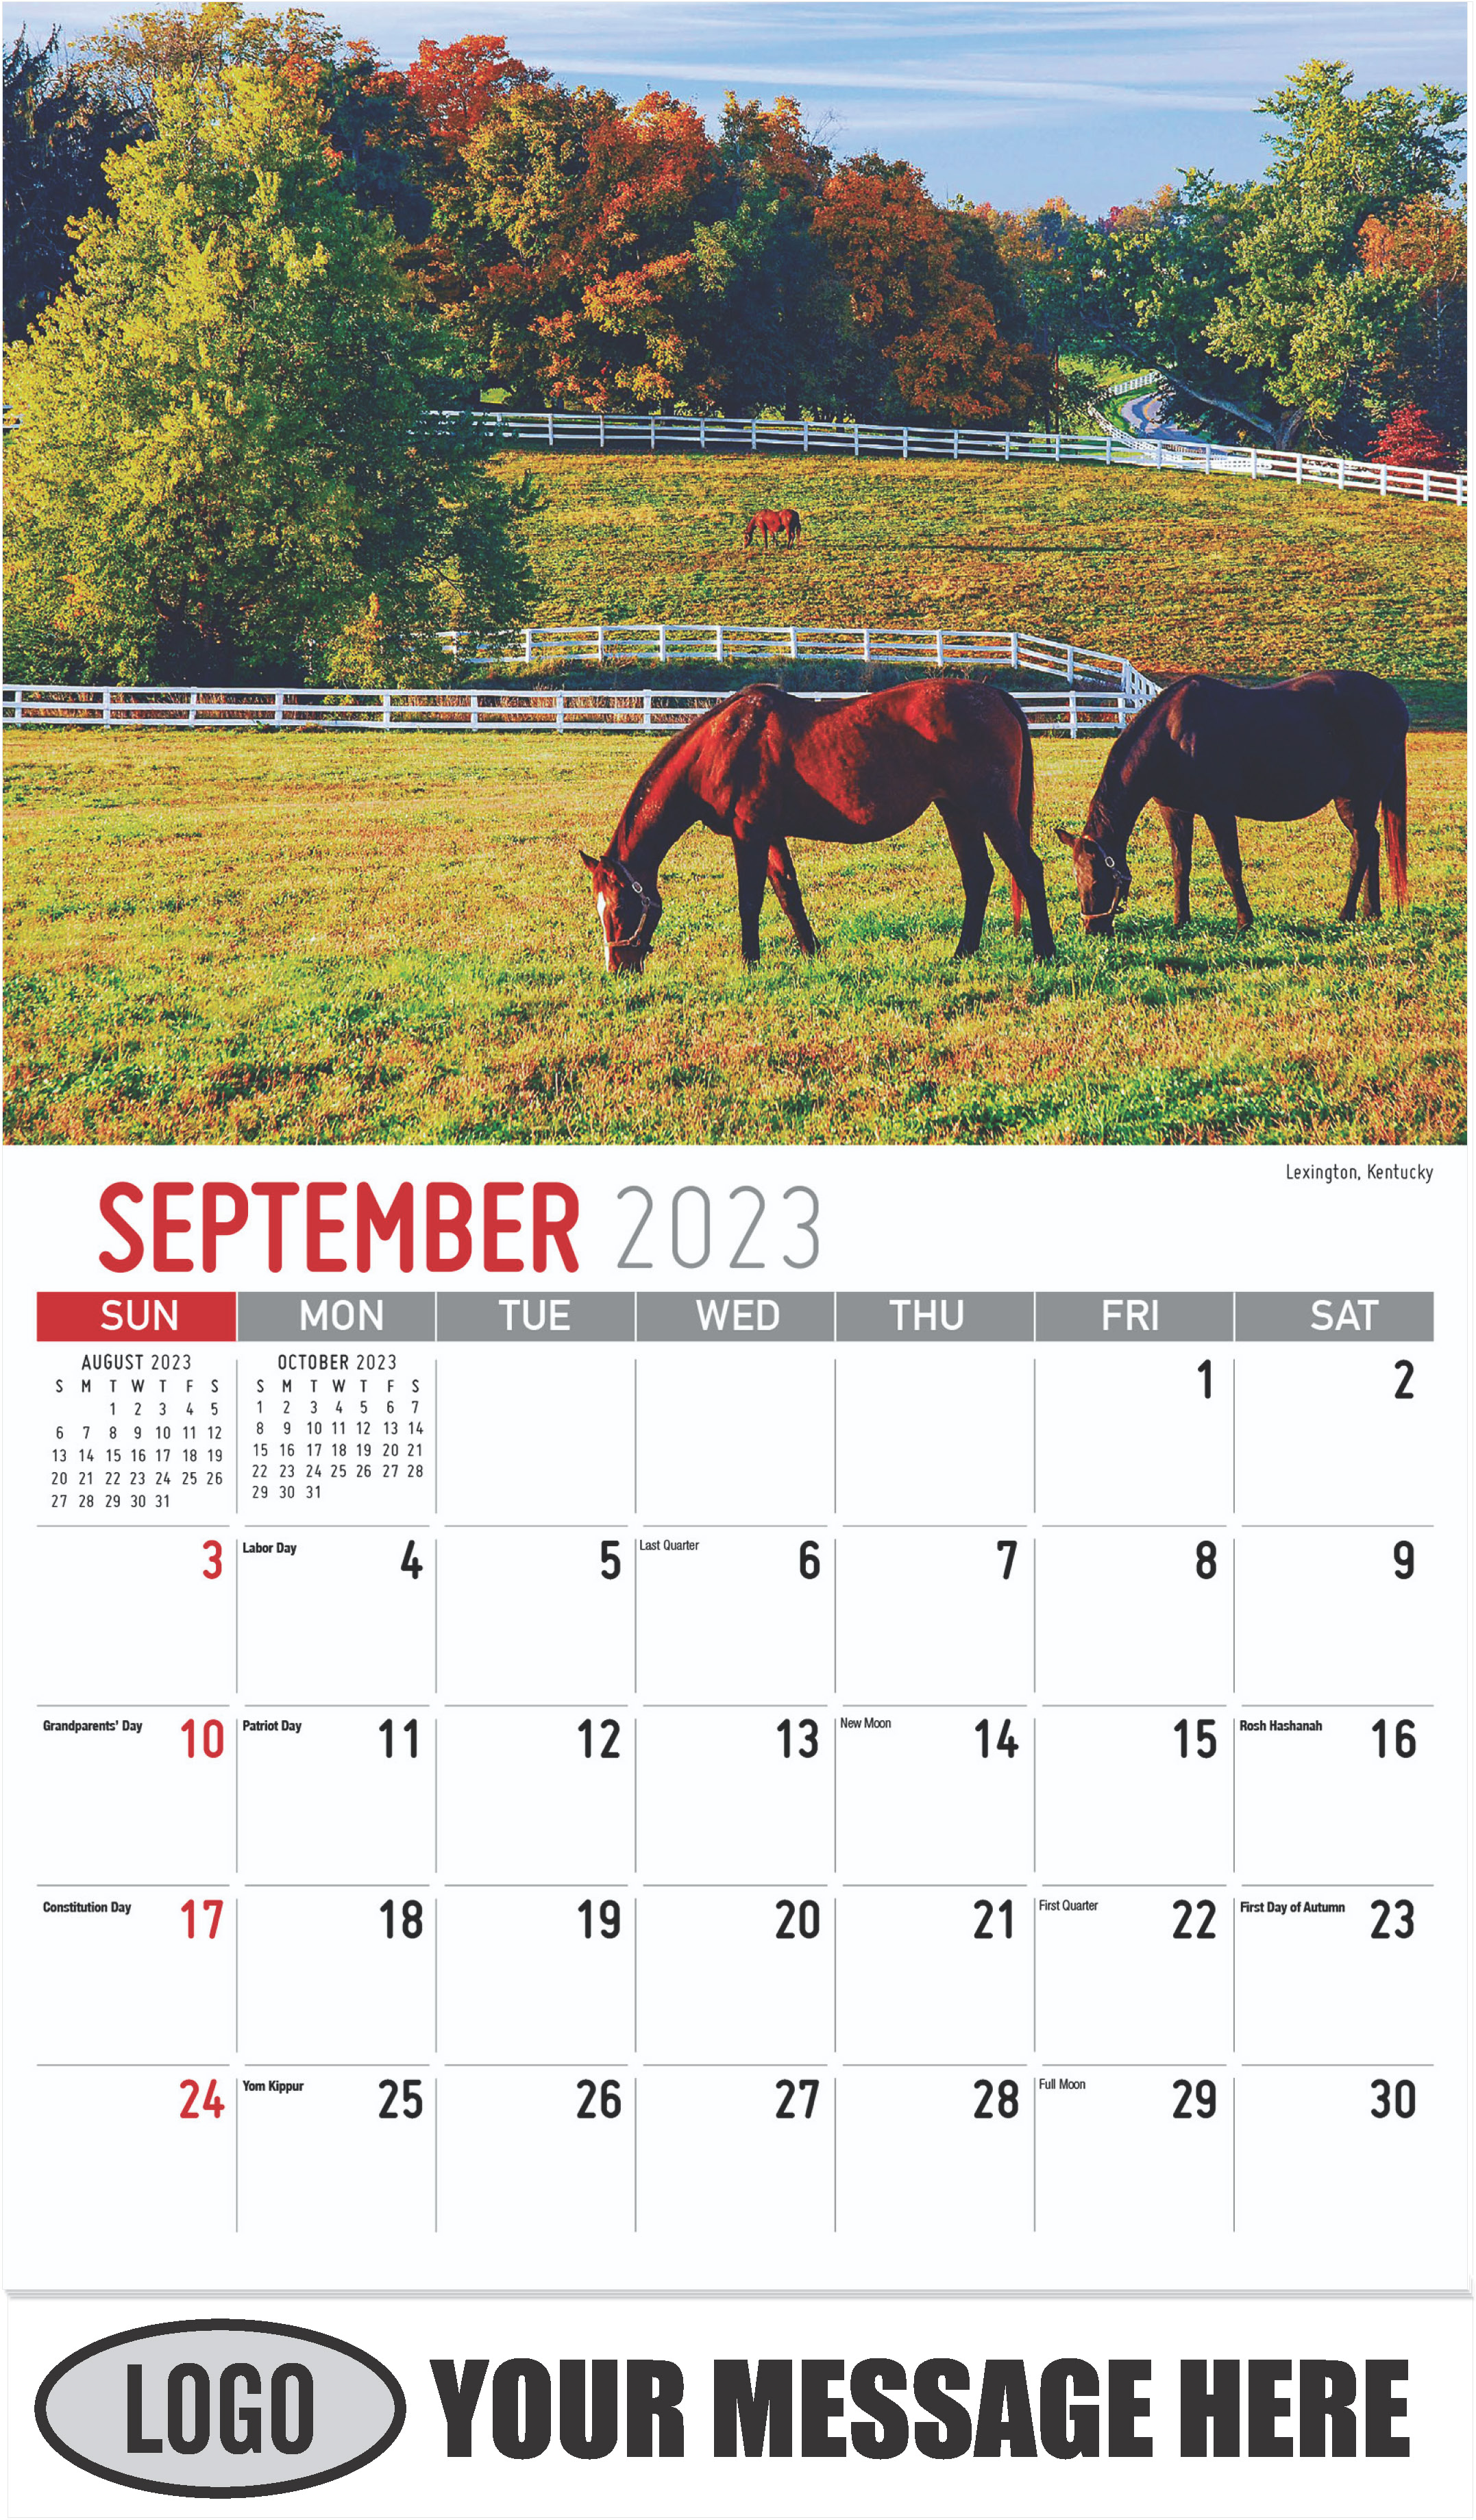 Lexington, Kentucky - September - Scenes of Southeast USA 2023 Promotional Calendar